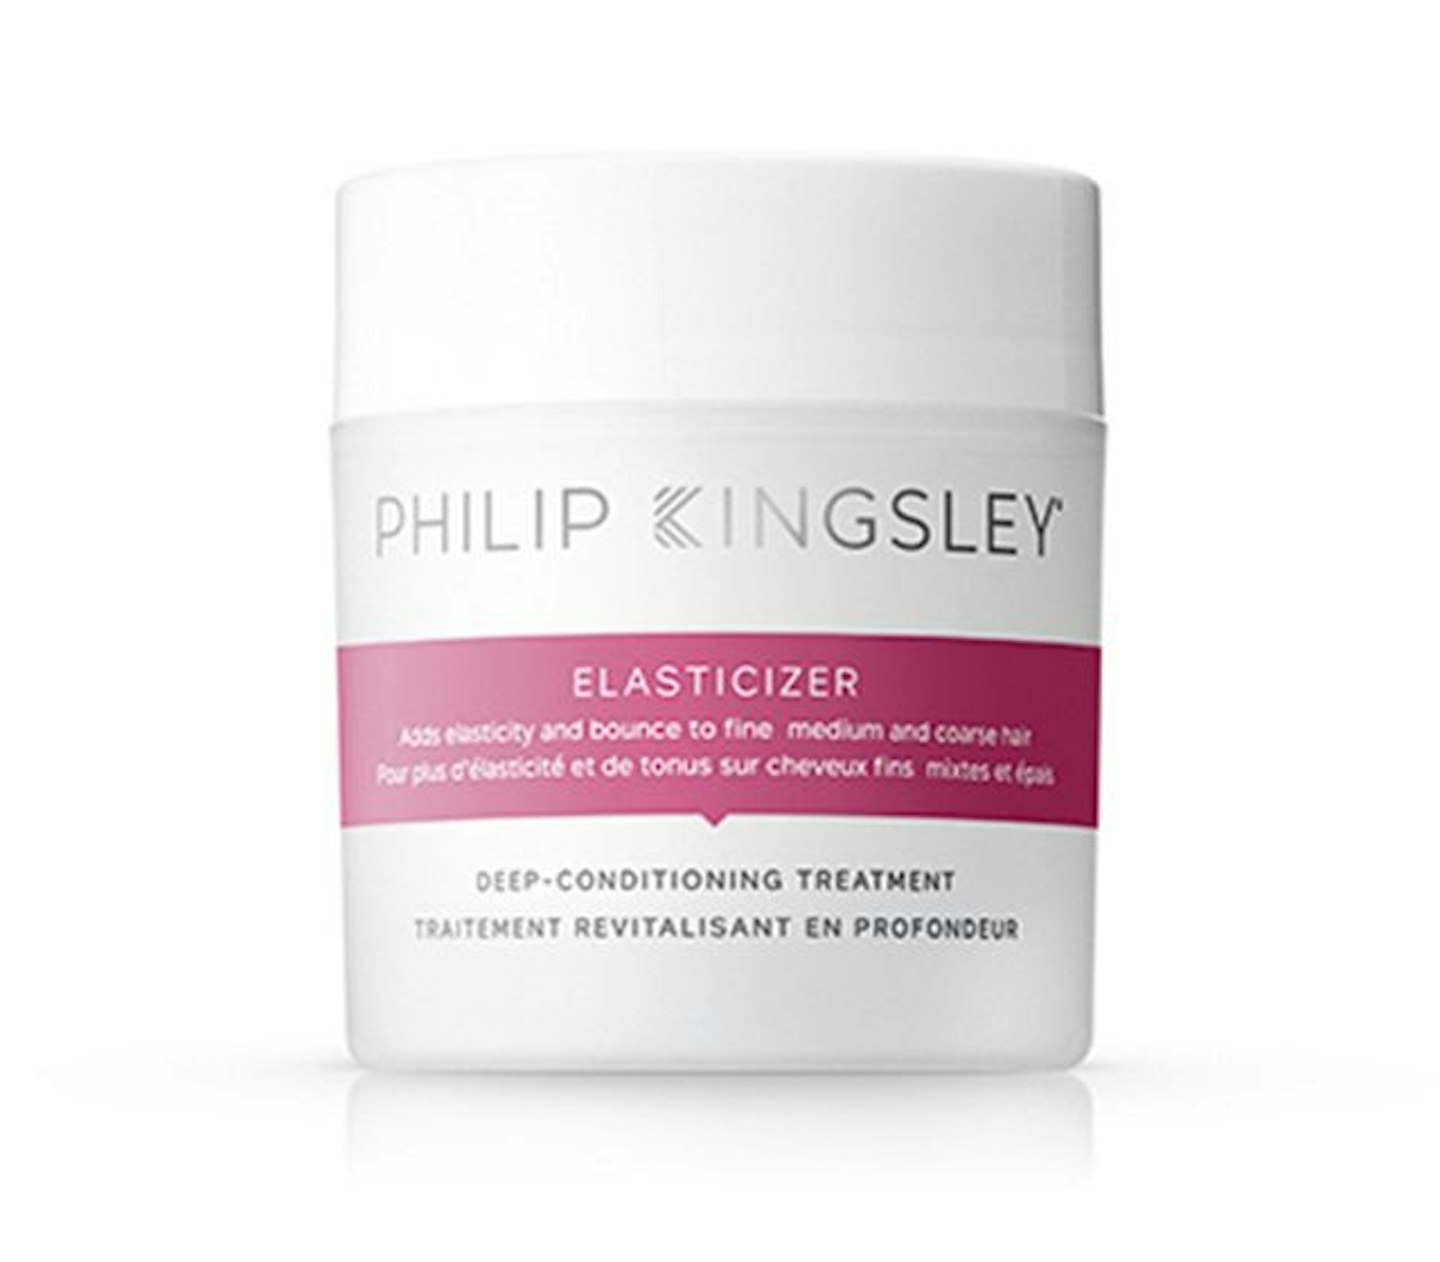 Philip Kingsley Elasticizer Deep-Conditioning Treatment, £19